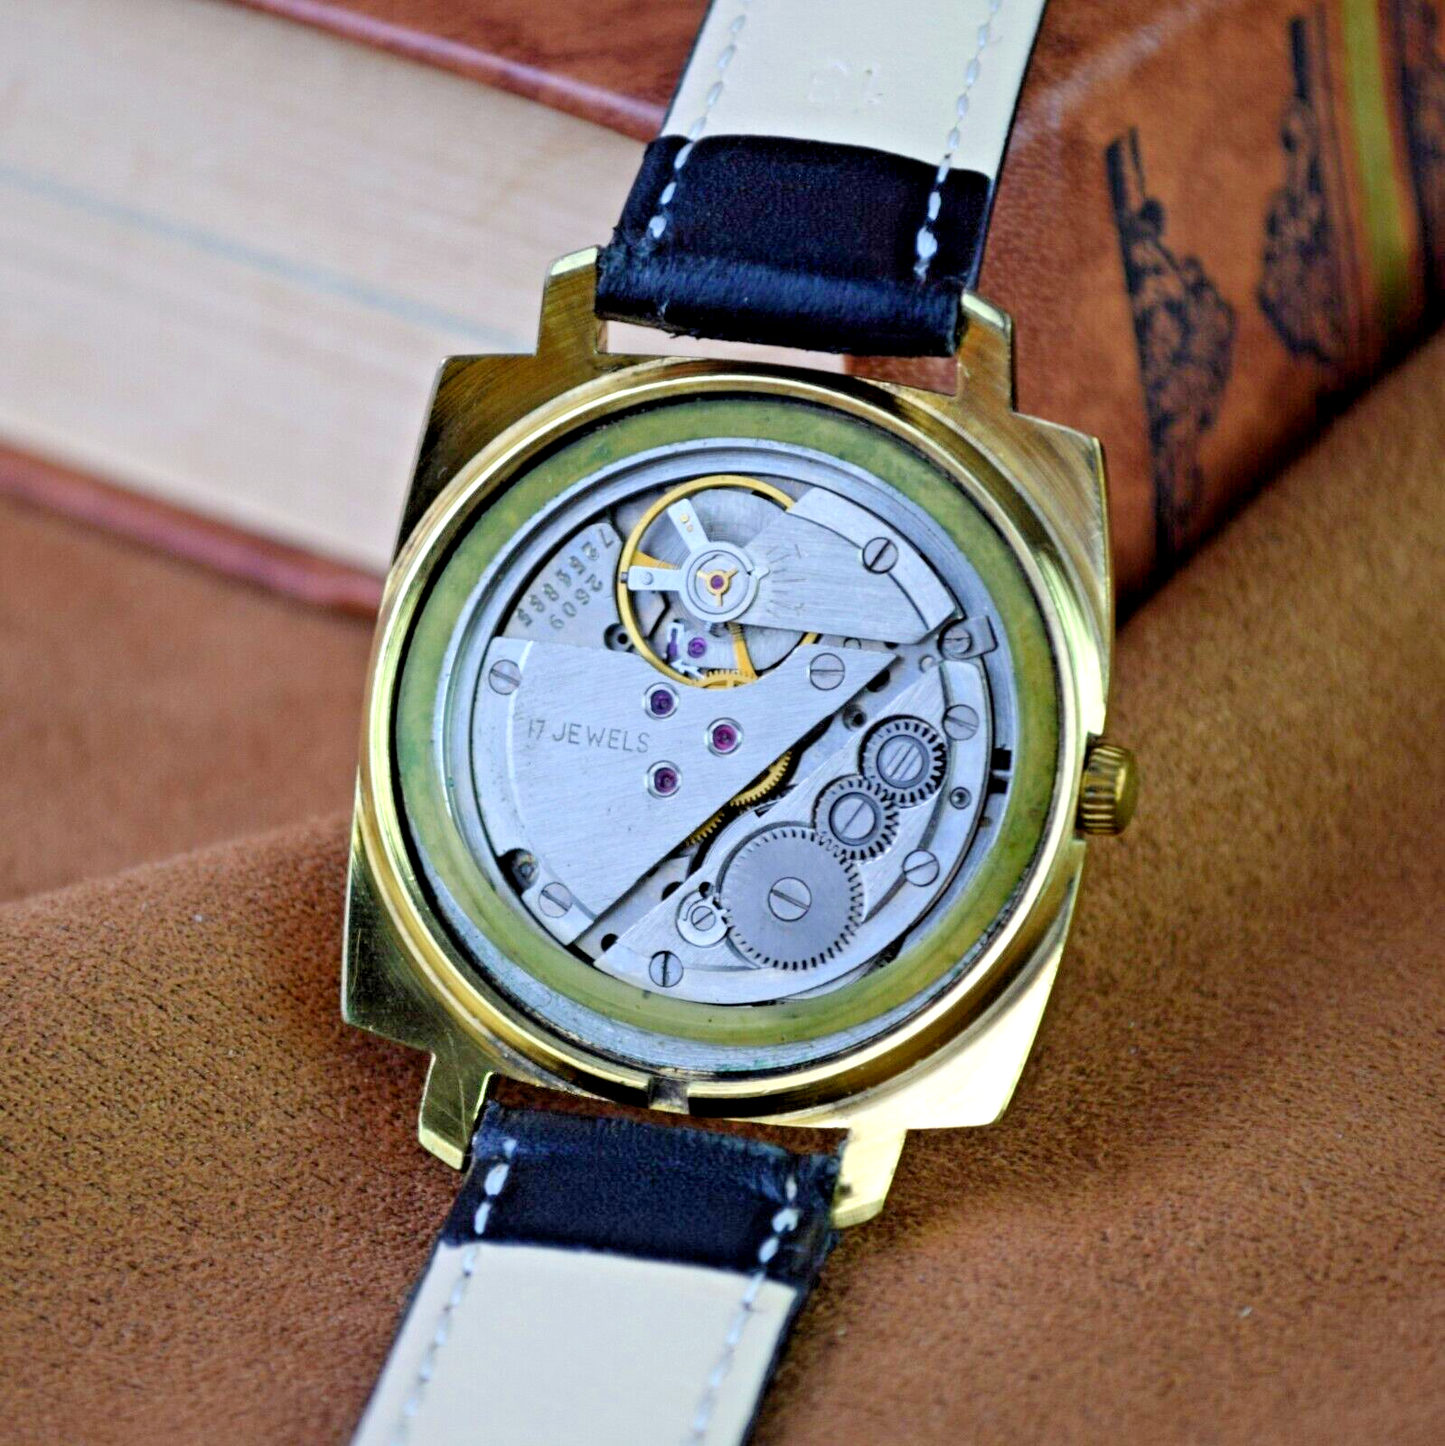 Soviet Wristwatch POLJOT 17 Jewels Mechanical Mens Watch Gold Dial USSR Vintage